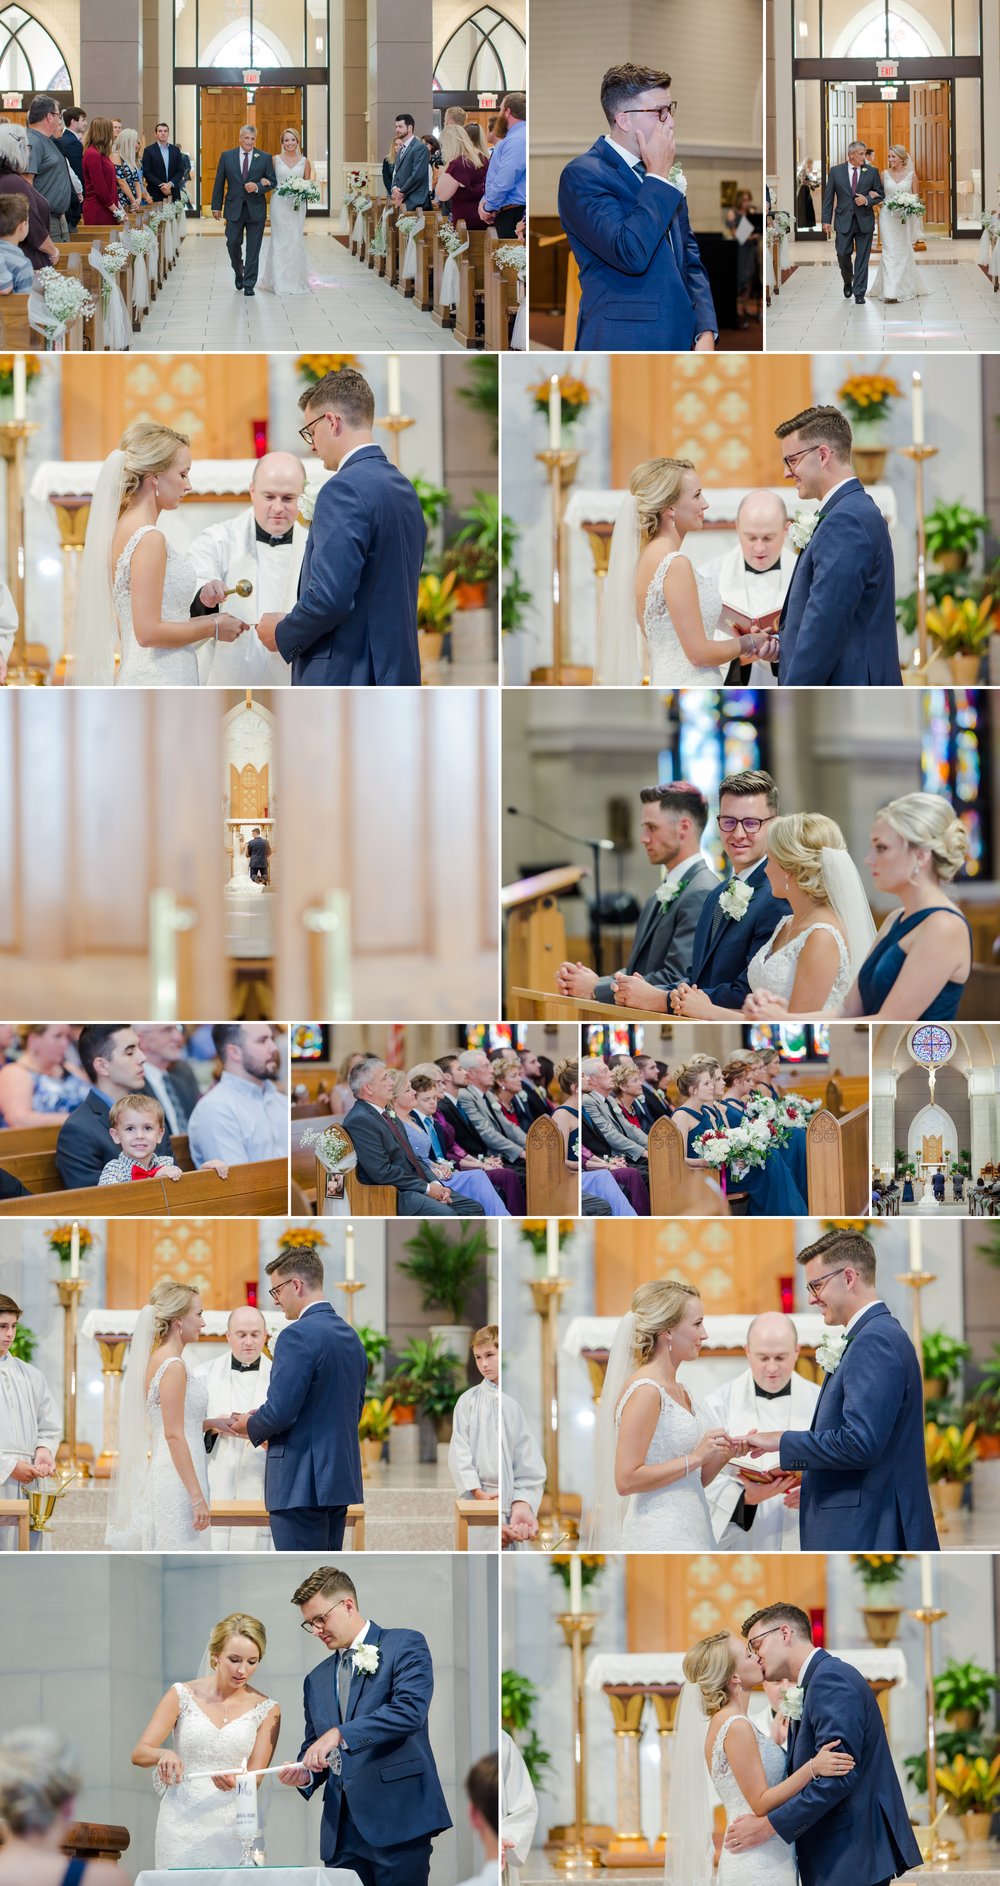  wedding_photography_reception_navy_gold_ideas_ceremony_catholic_church_details 3 